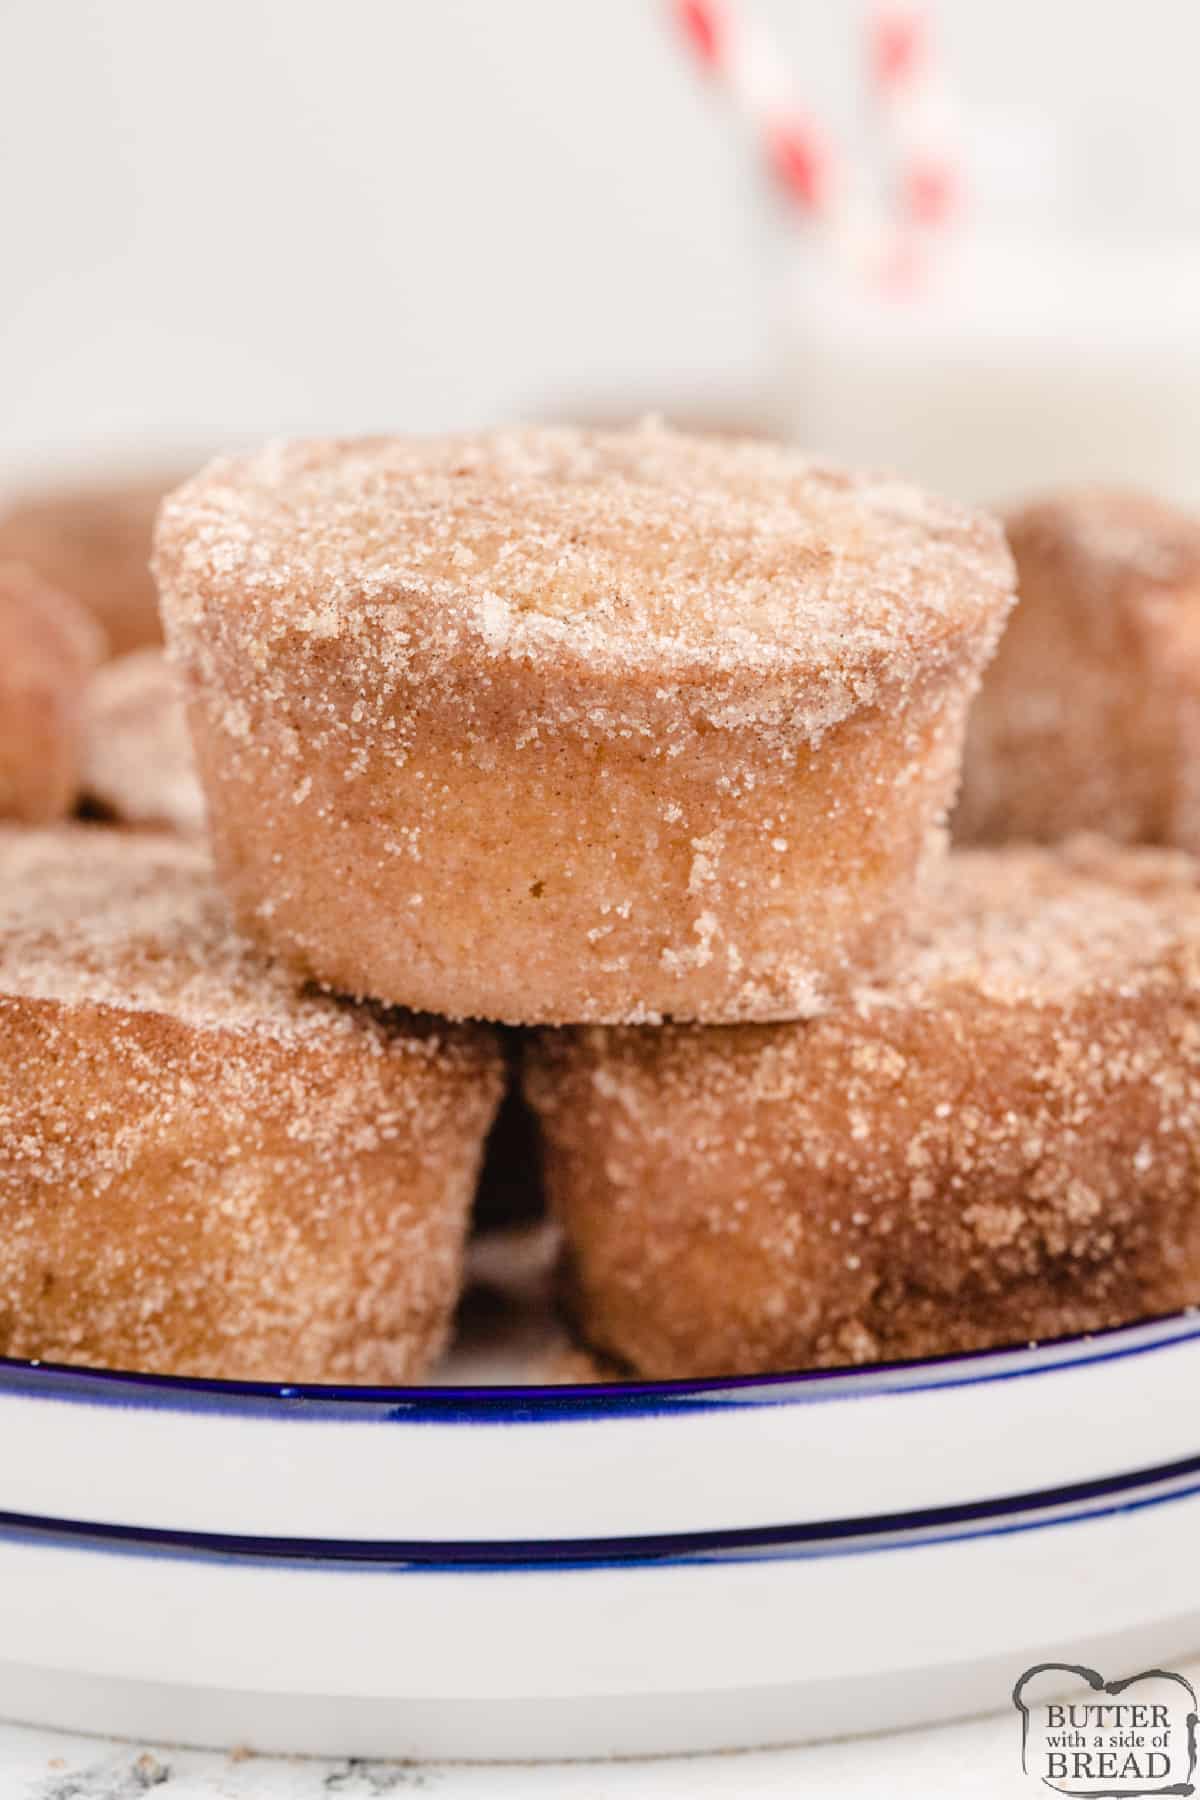 Muffins that taste like cinnamon sugar donuts